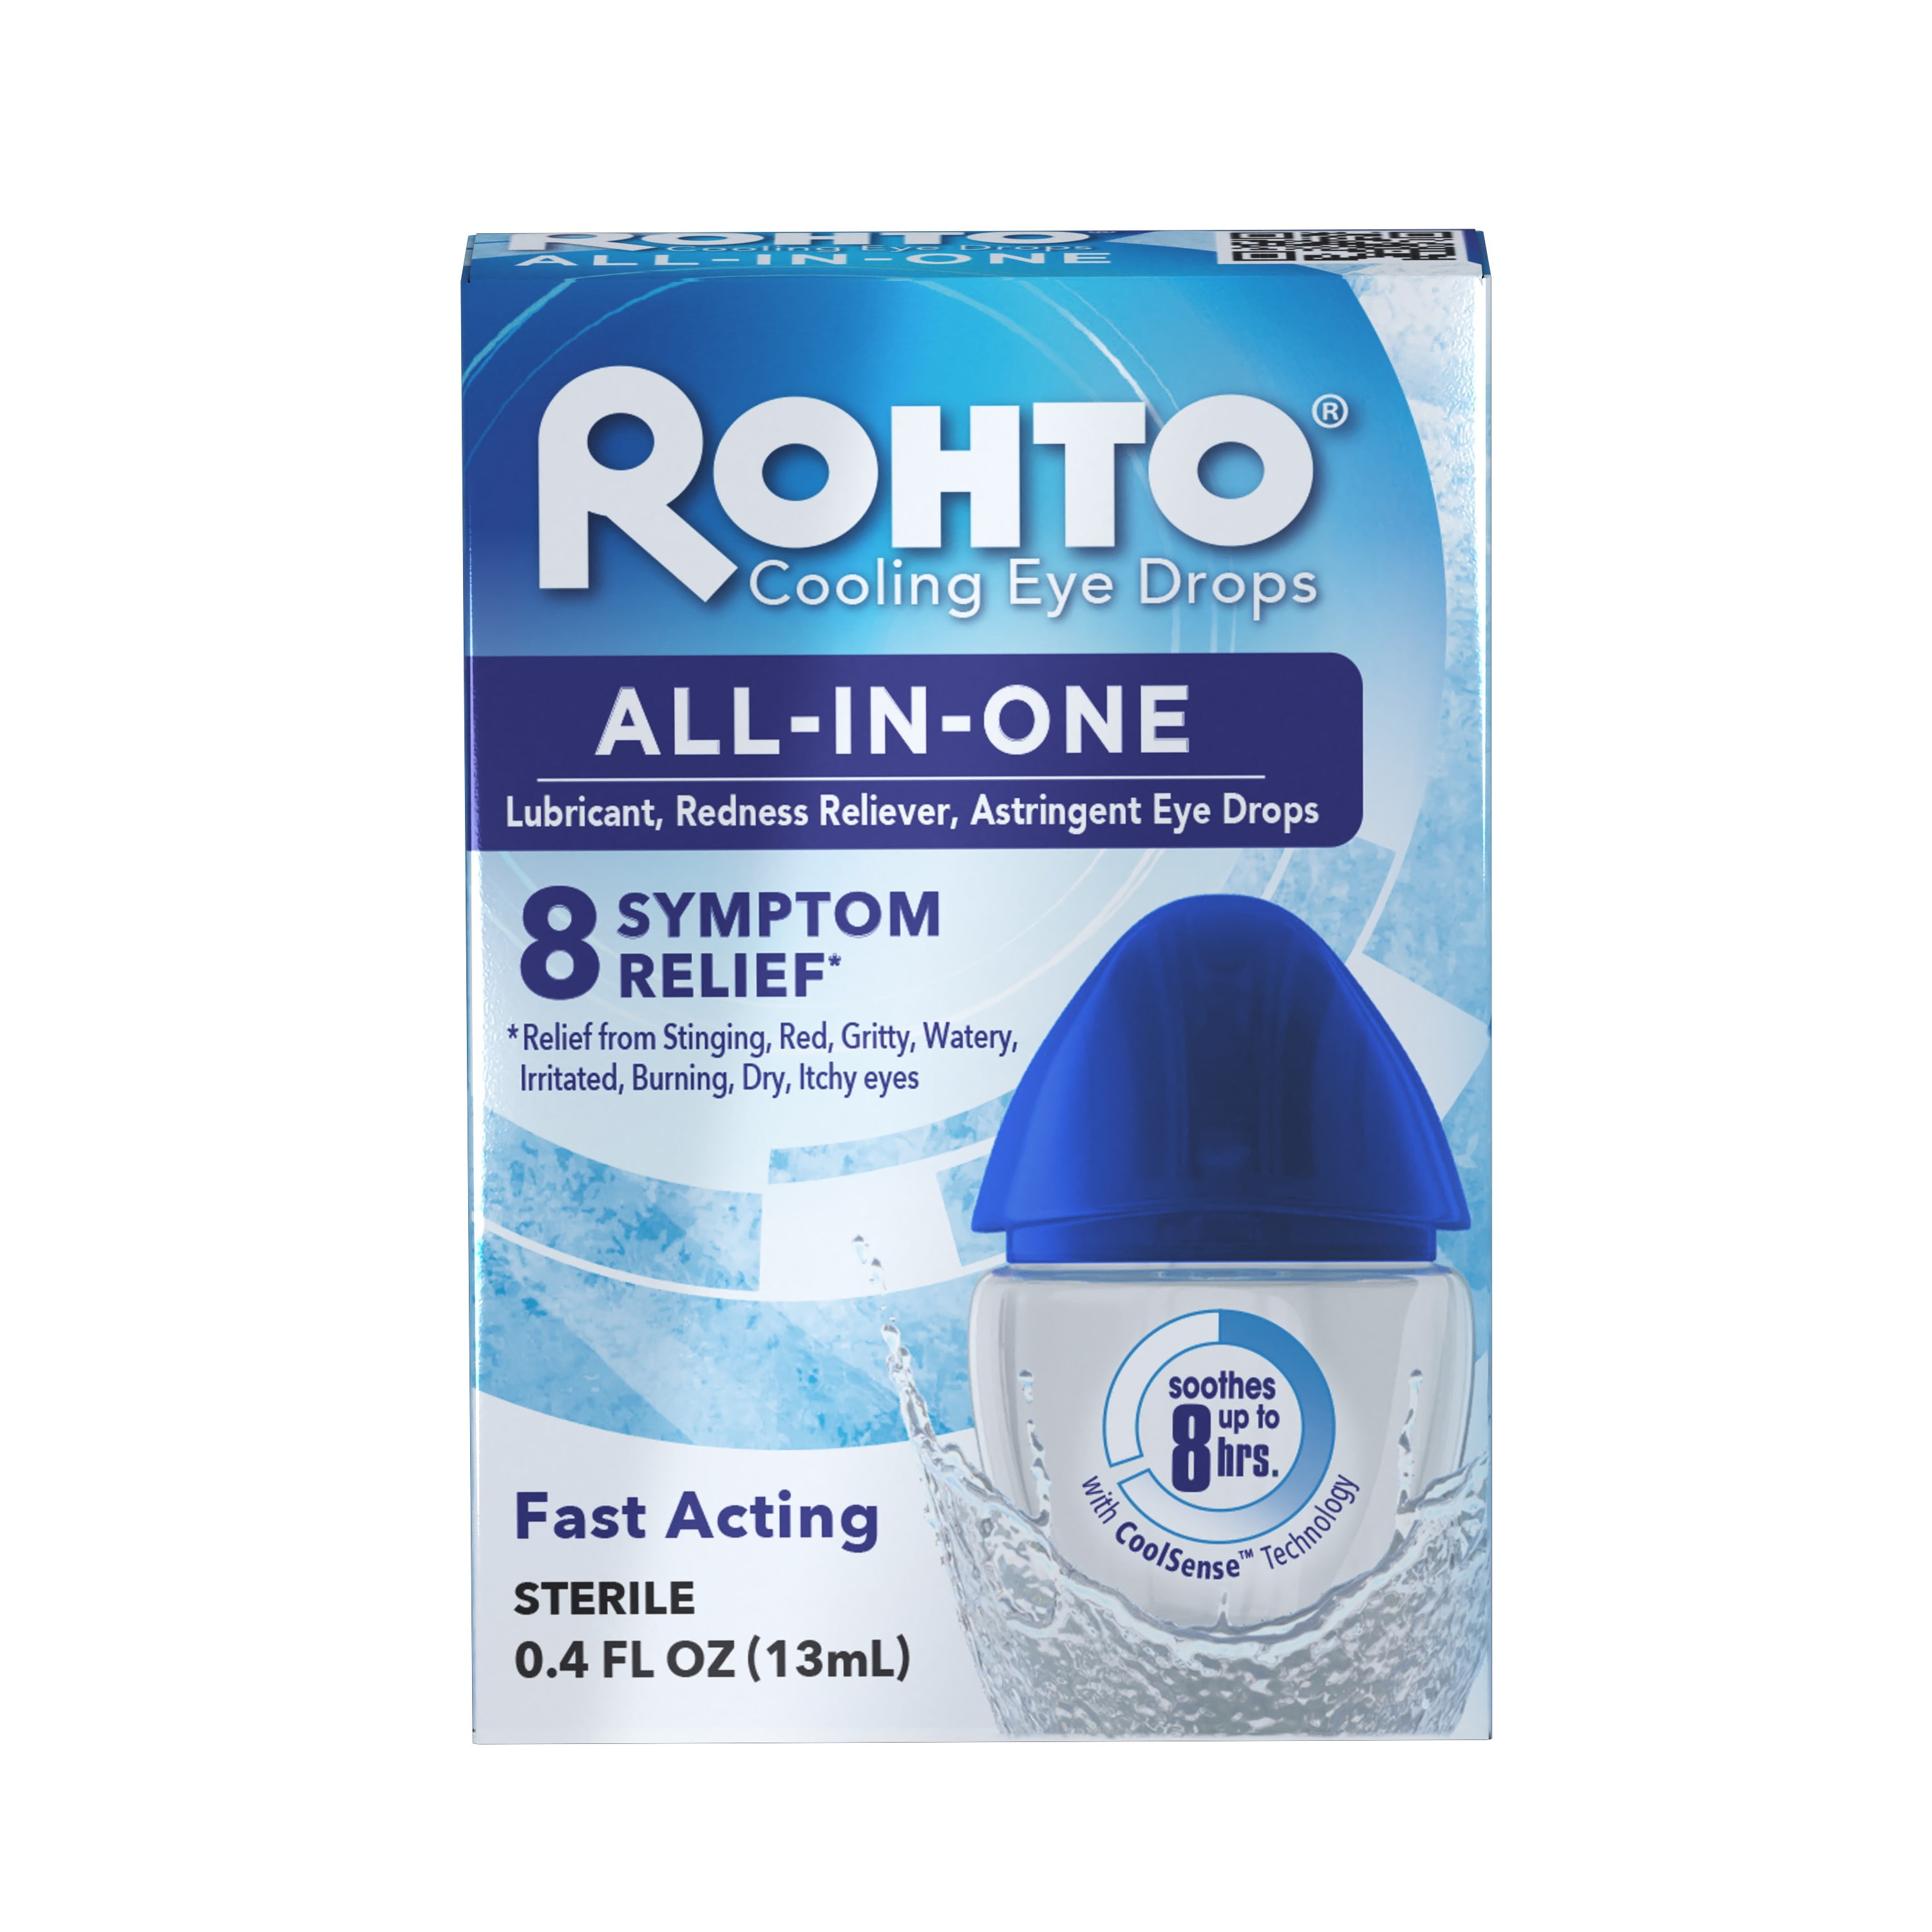 Rohto All-In-One Multi-Symptom Relief Cooling Eye Drops - 0.4 fl oz Bottle